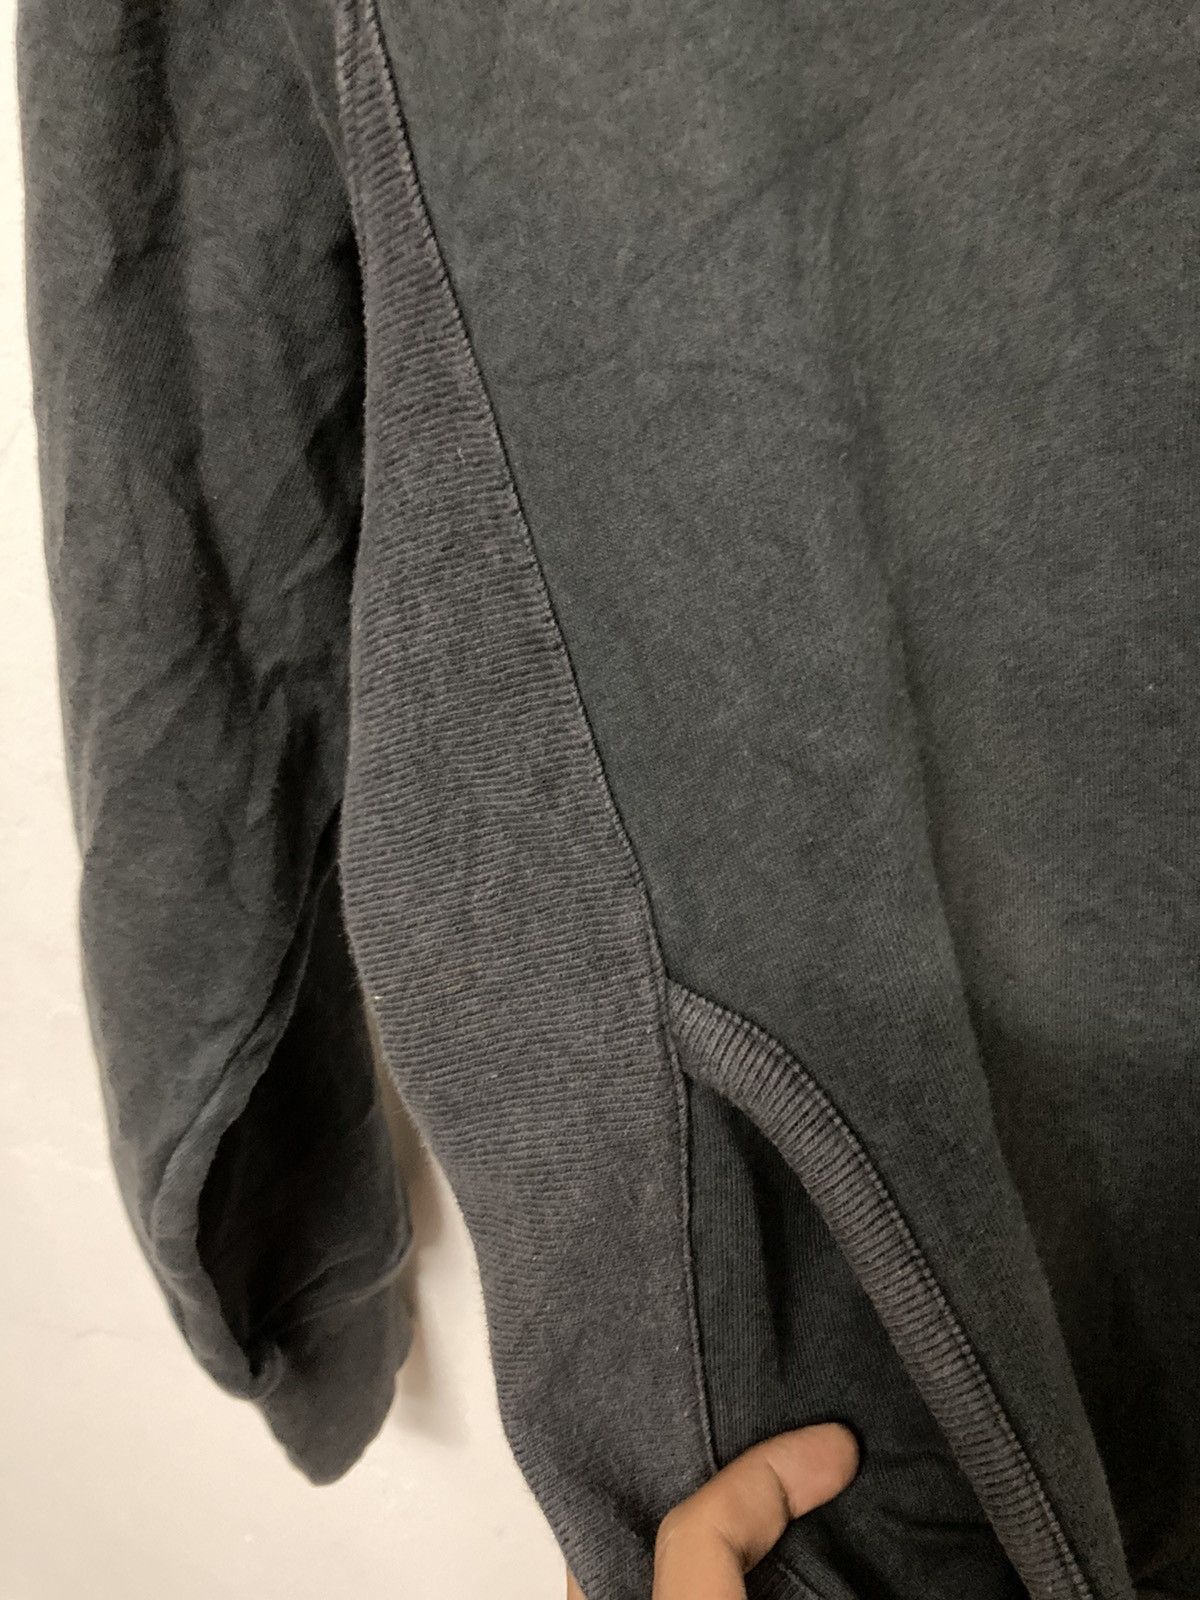 Adidas Adi Dassler Signature Crewneck Sweatshirt - 9